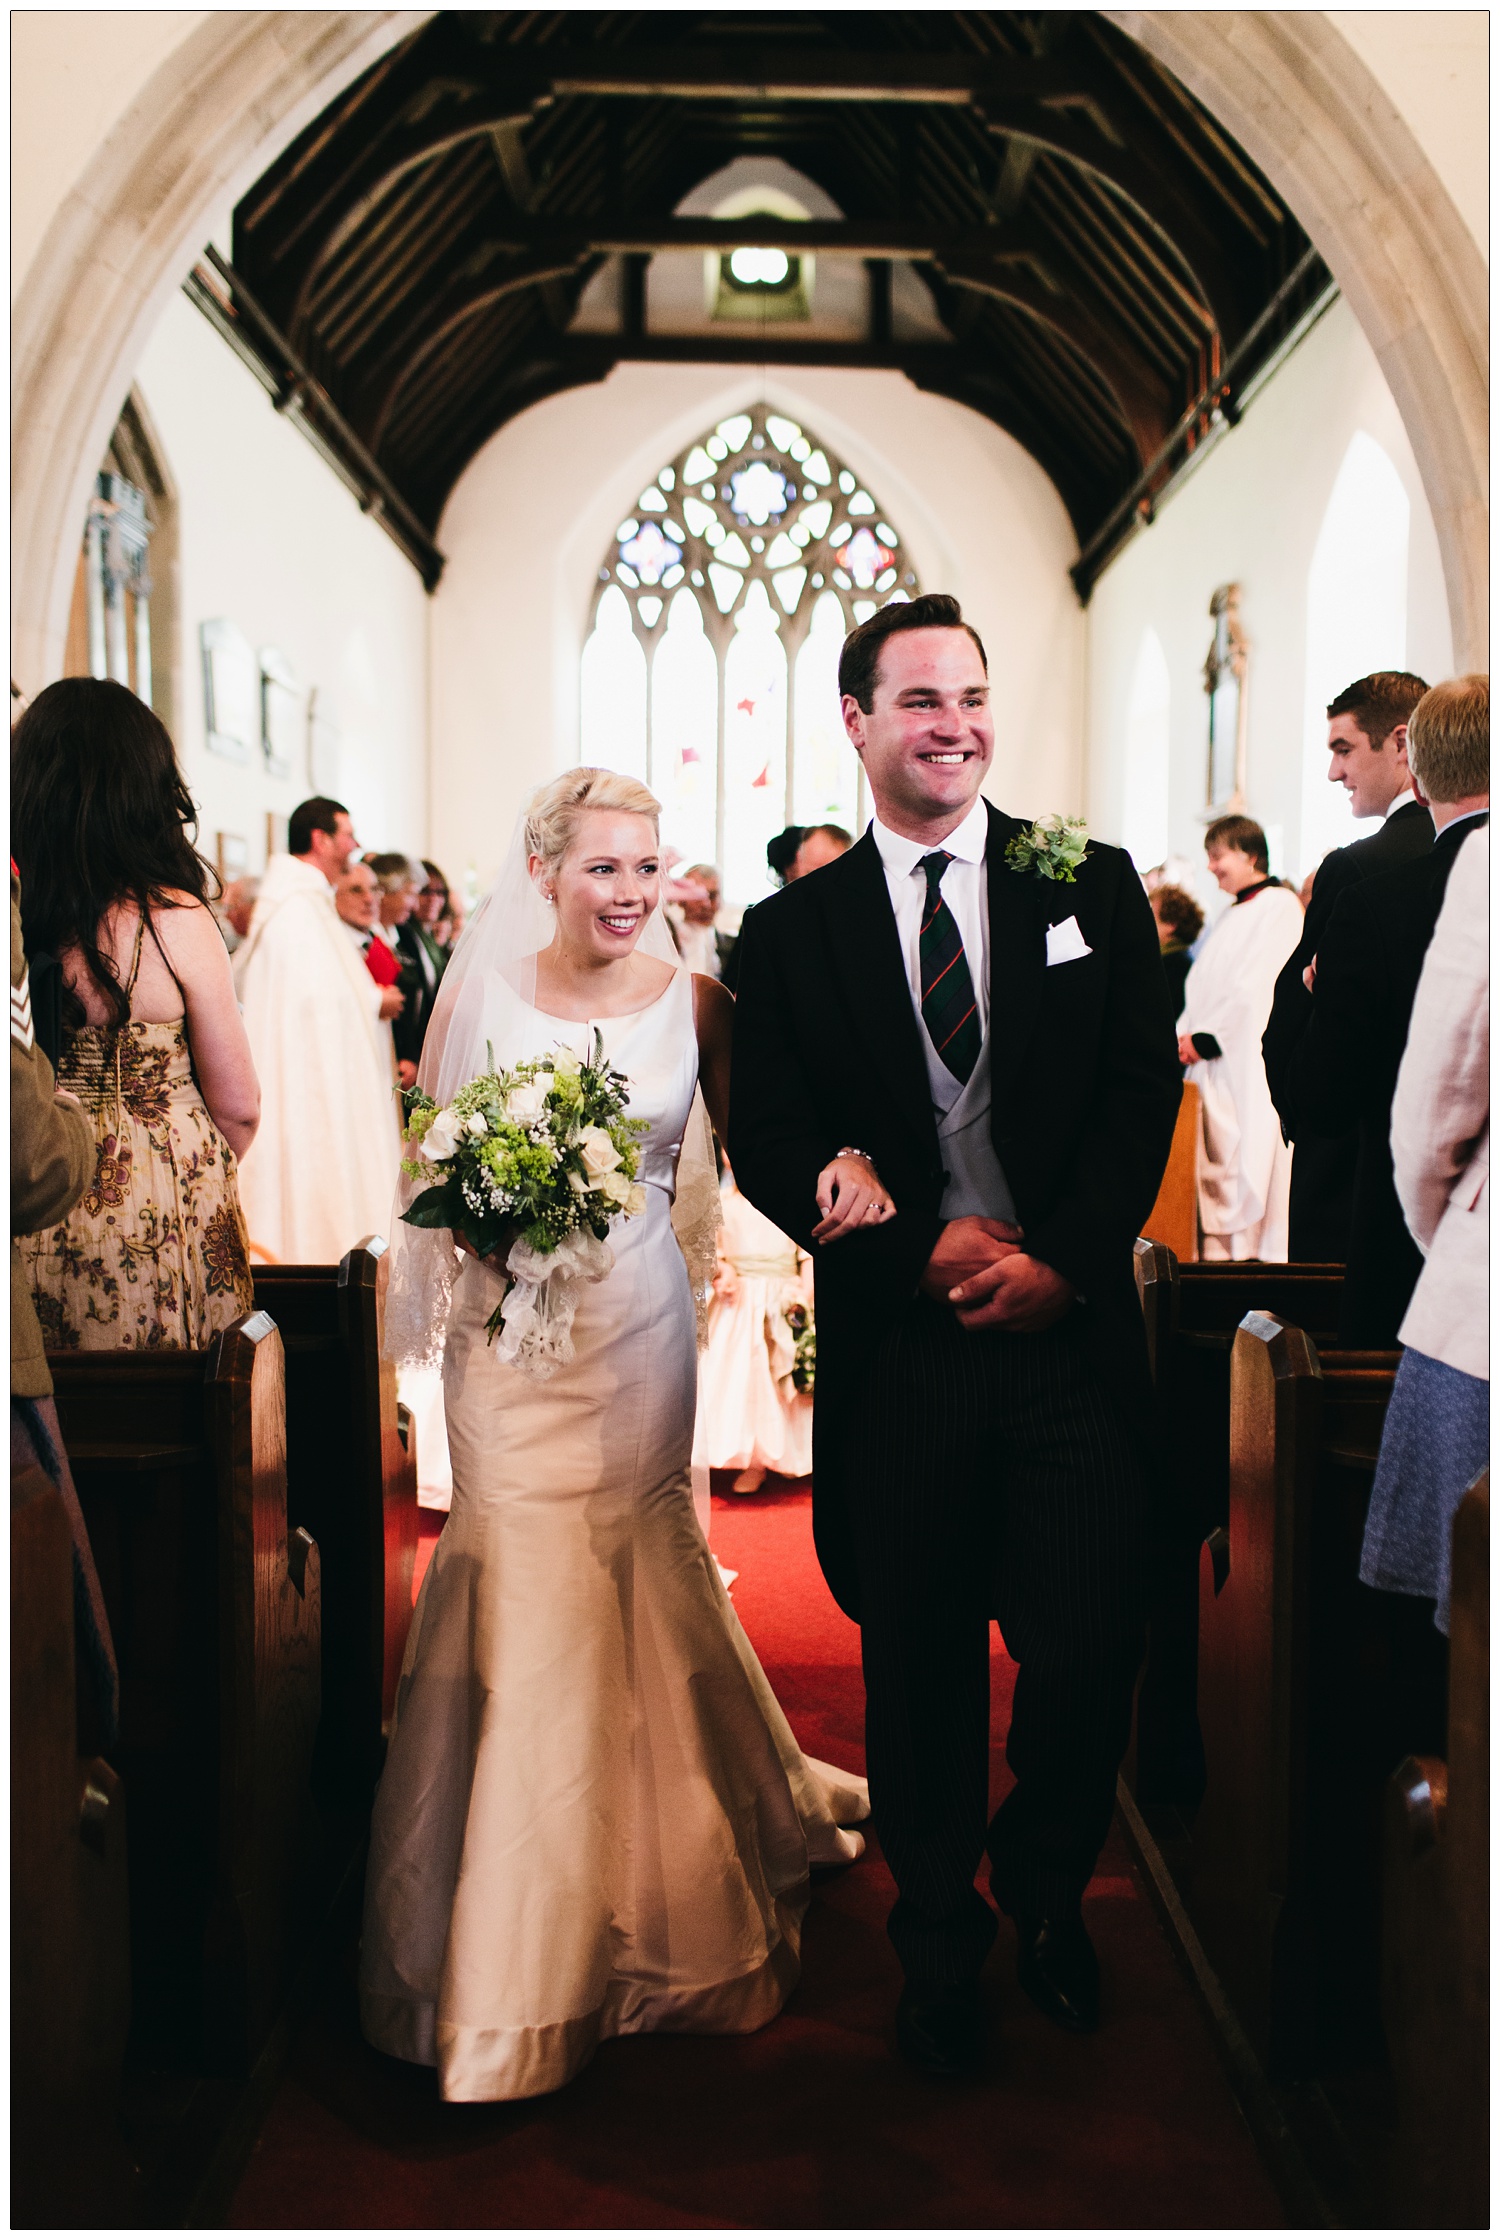 Bride & groom walking down the aisle at St Thomas’ church in Bradwell-on-Sea.